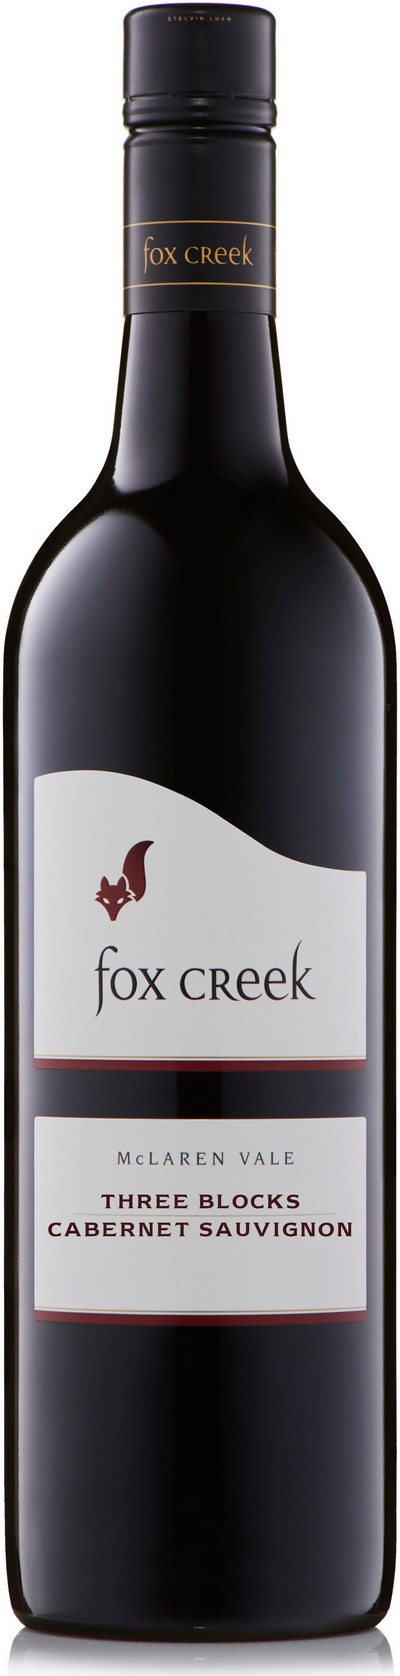 fox-creek-three-blocks-cabernet-sauvignon-2018